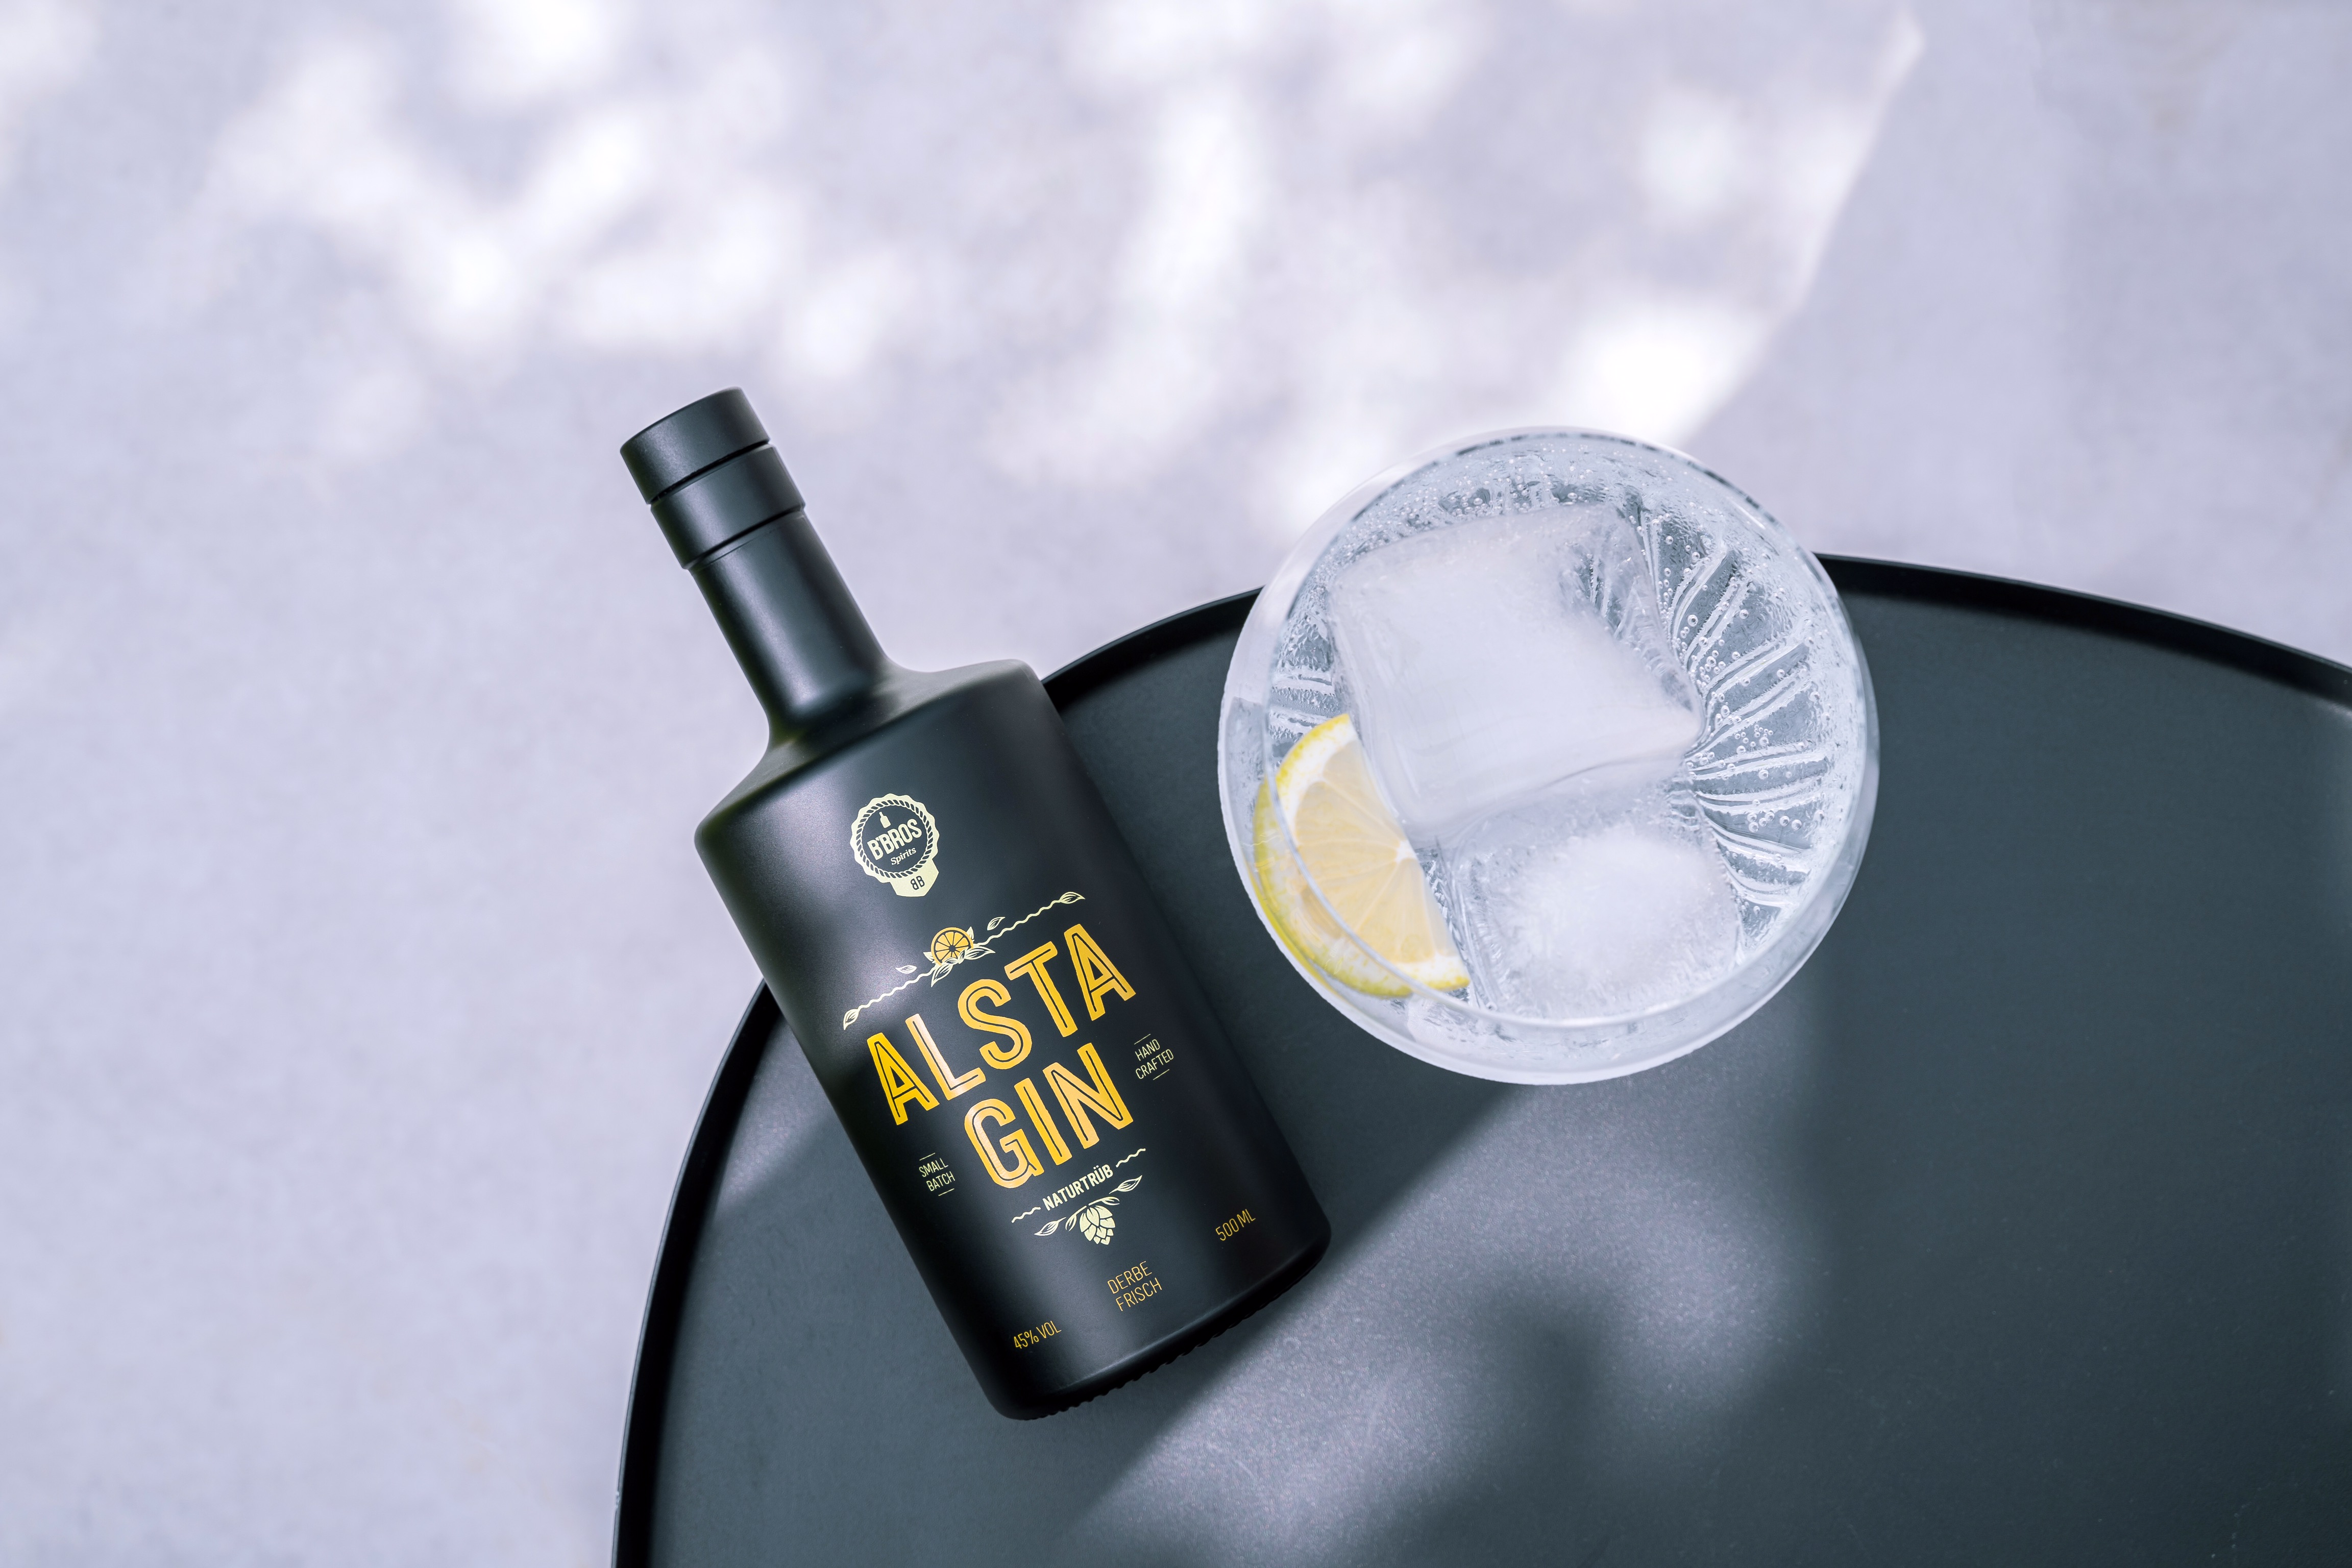 Alsta Gin 0,5L